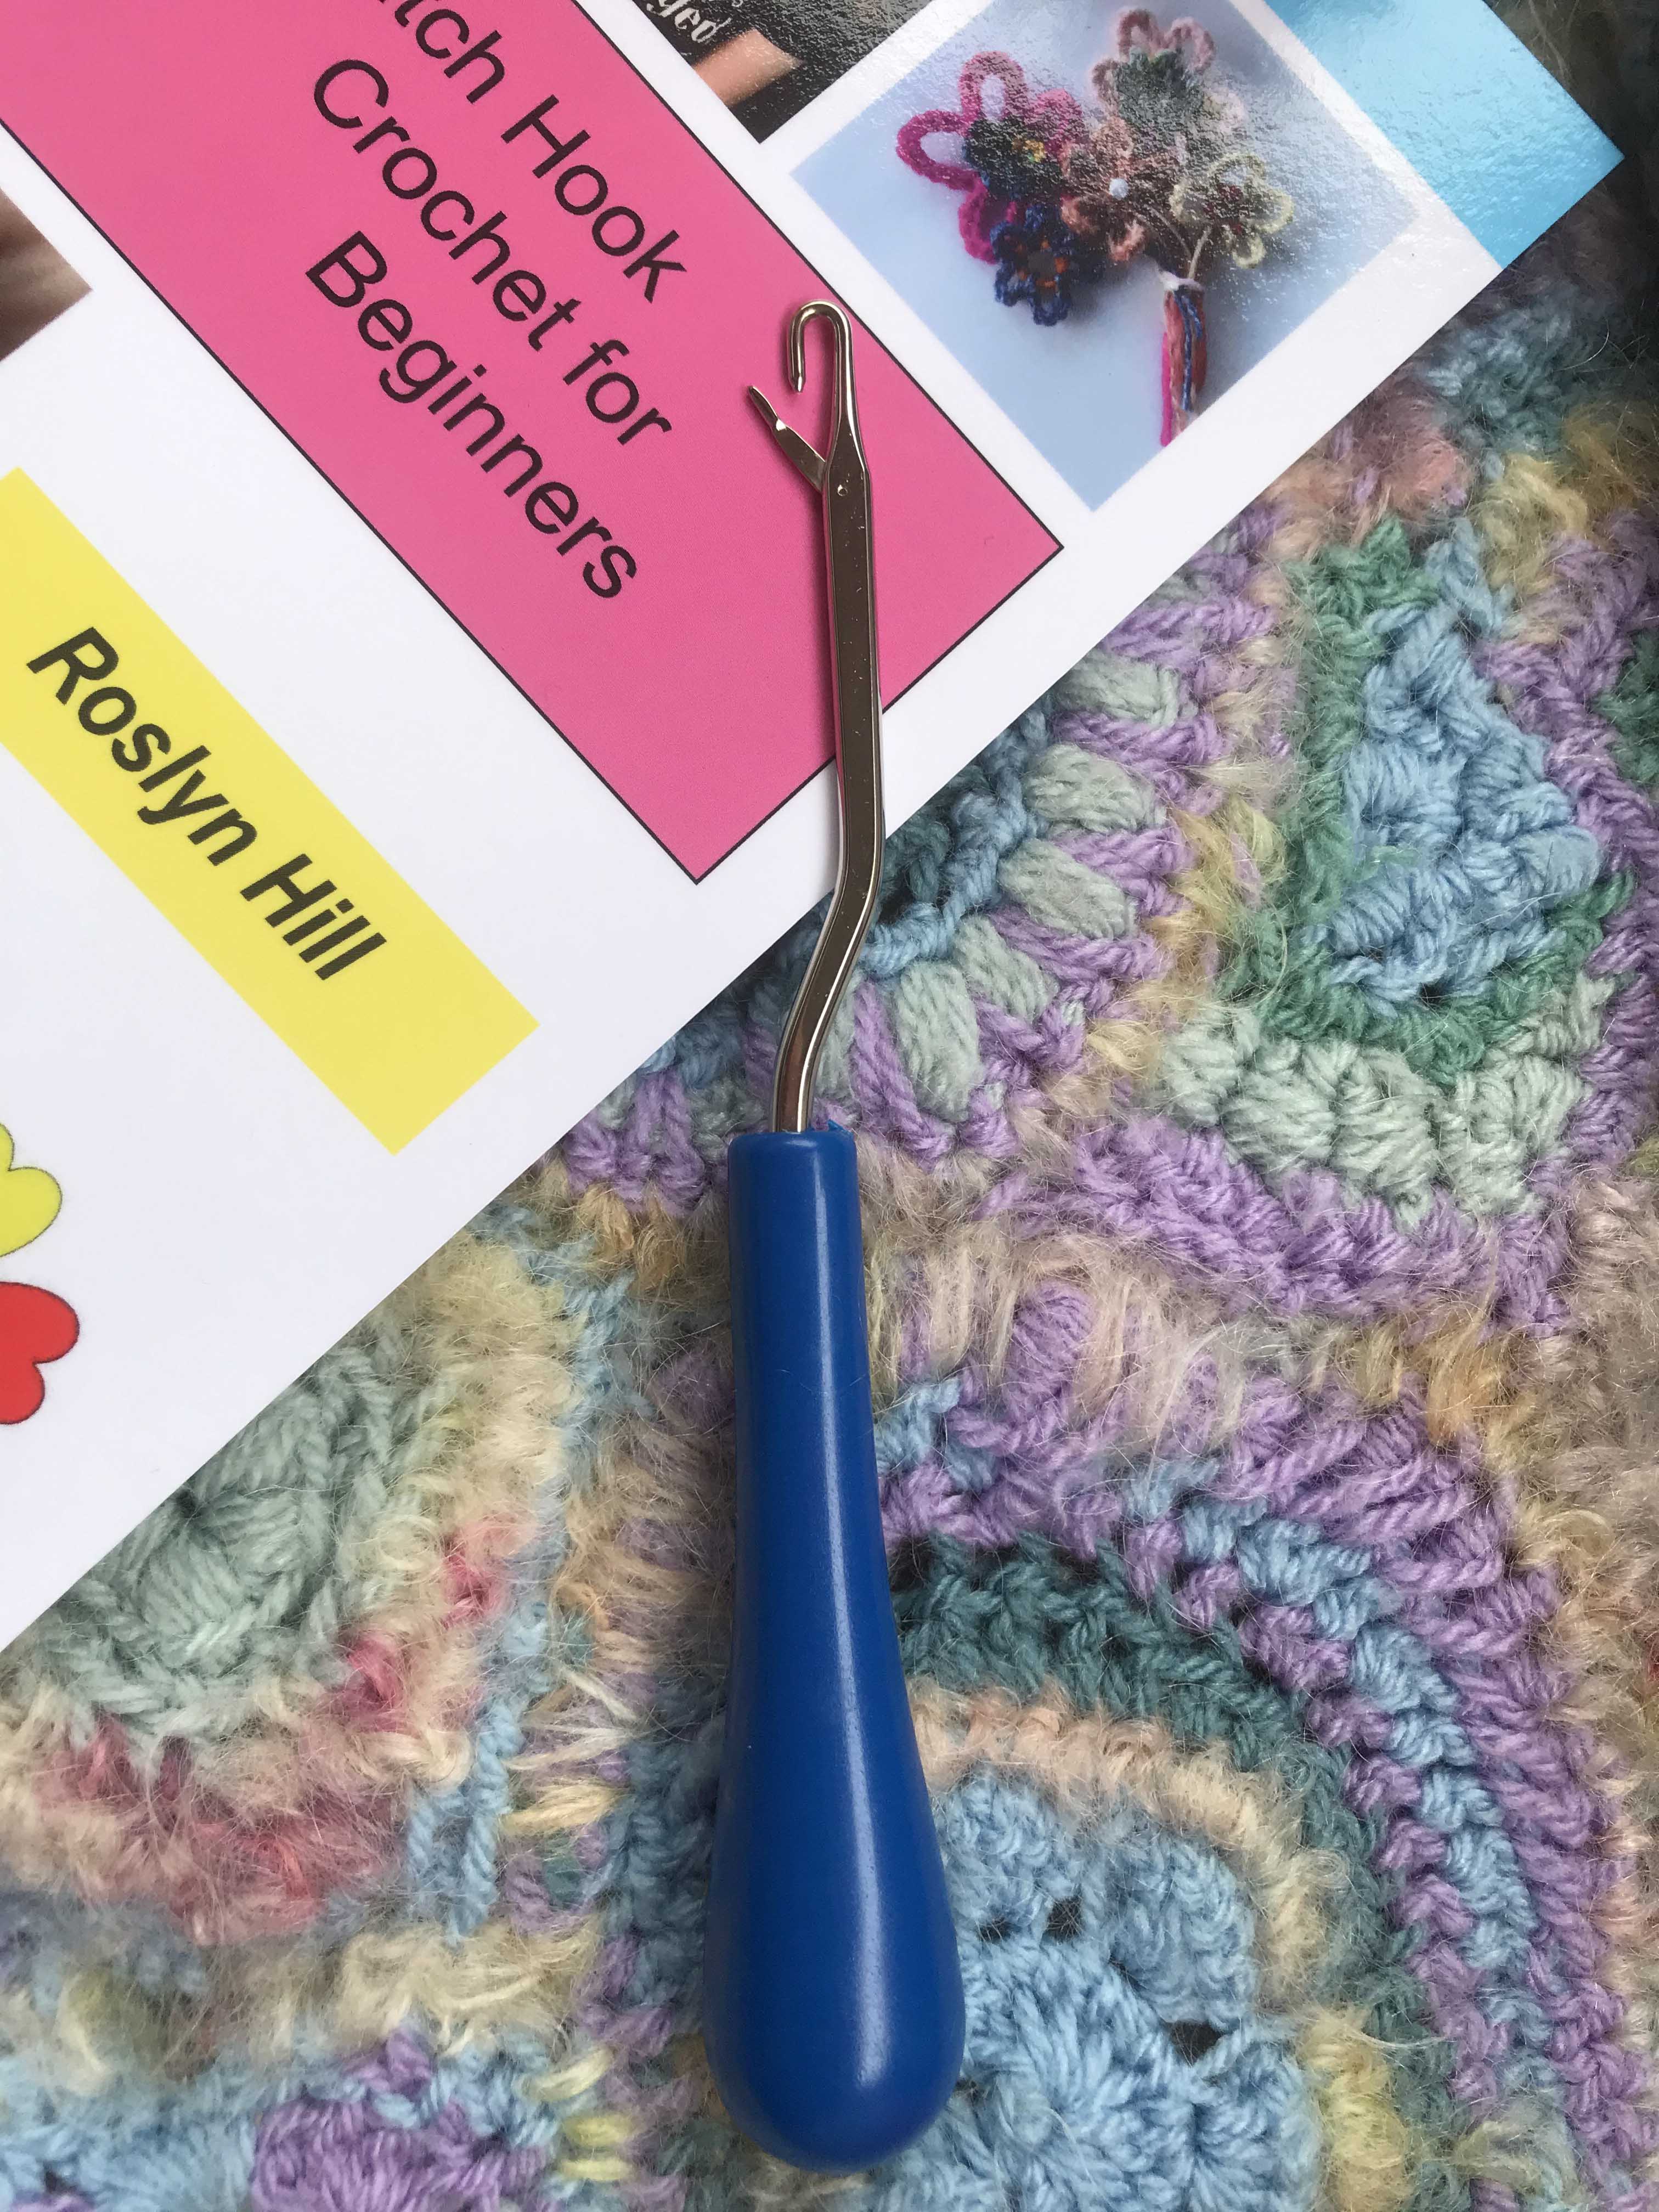 Latch hook, Knitting & Crochet Tools, Yarn